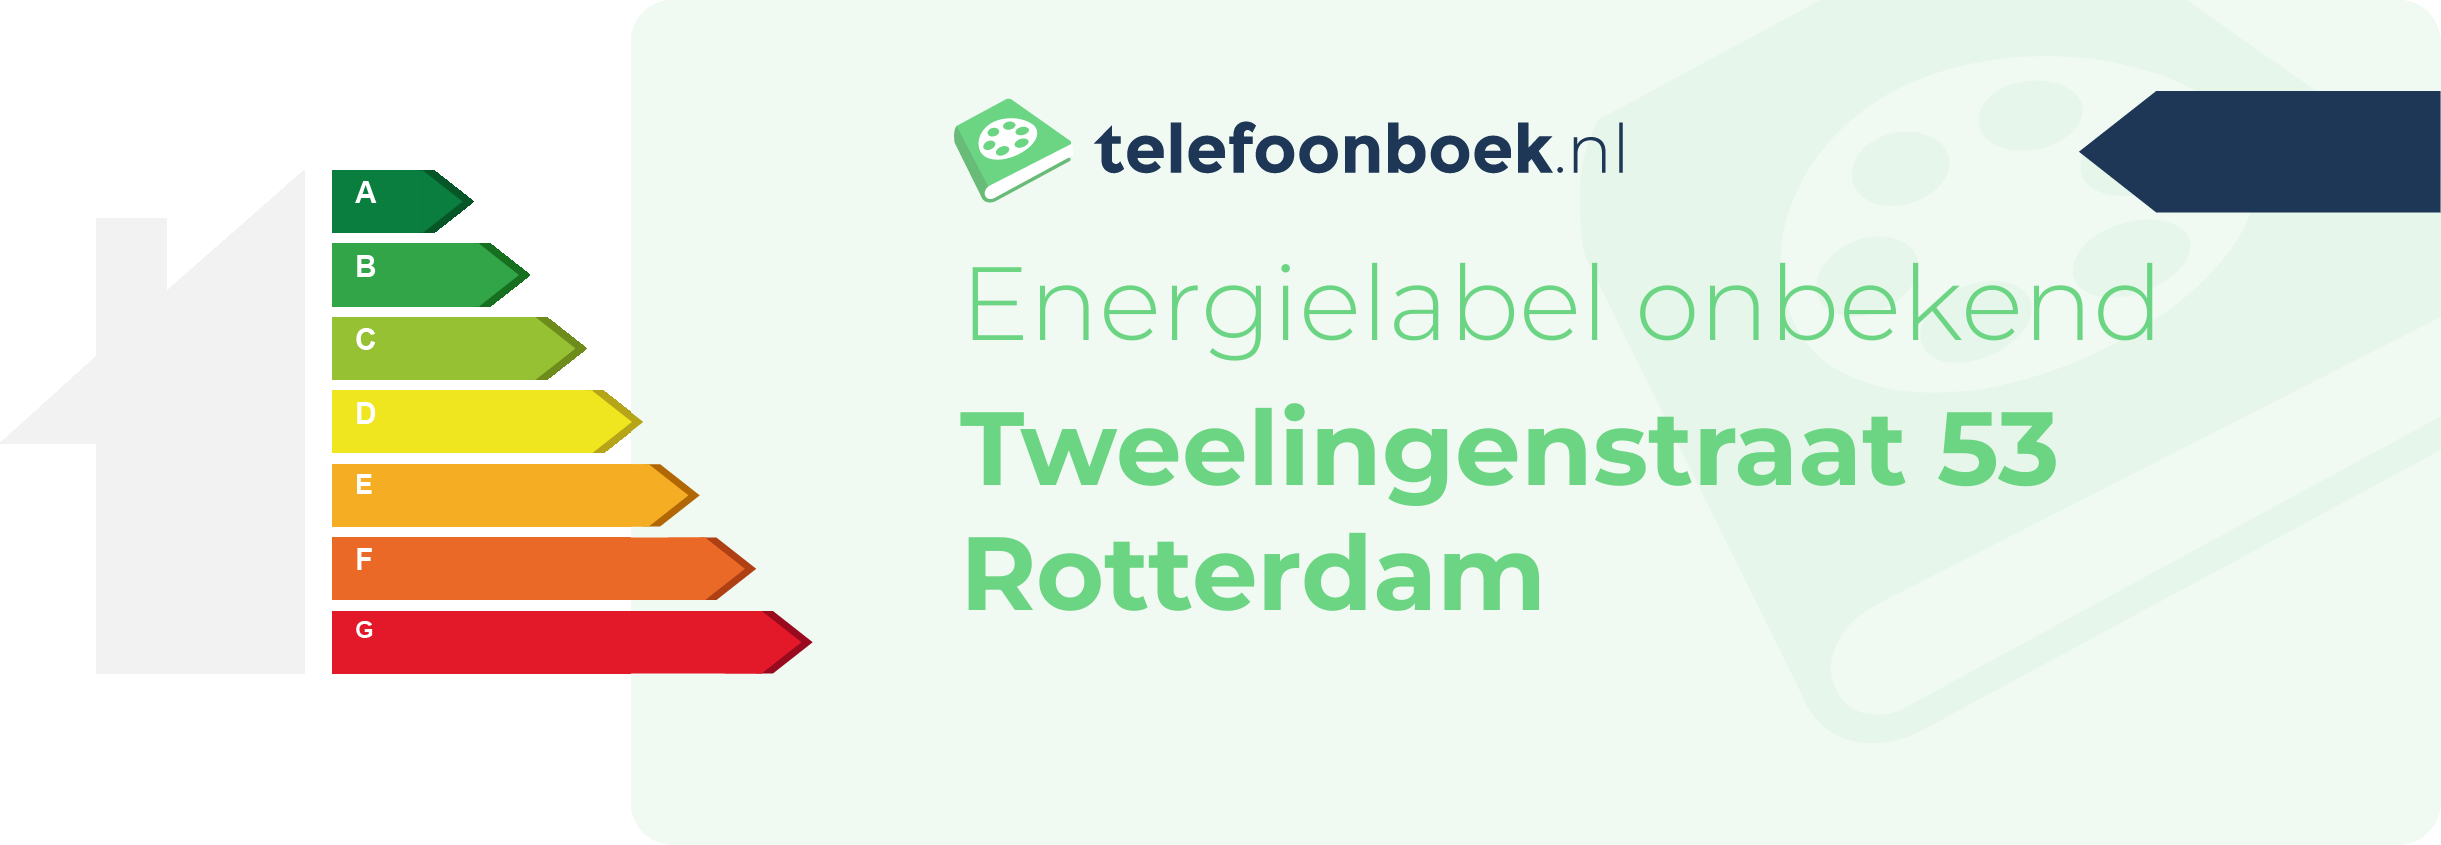 Energielabel Tweelingenstraat 53 Rotterdam